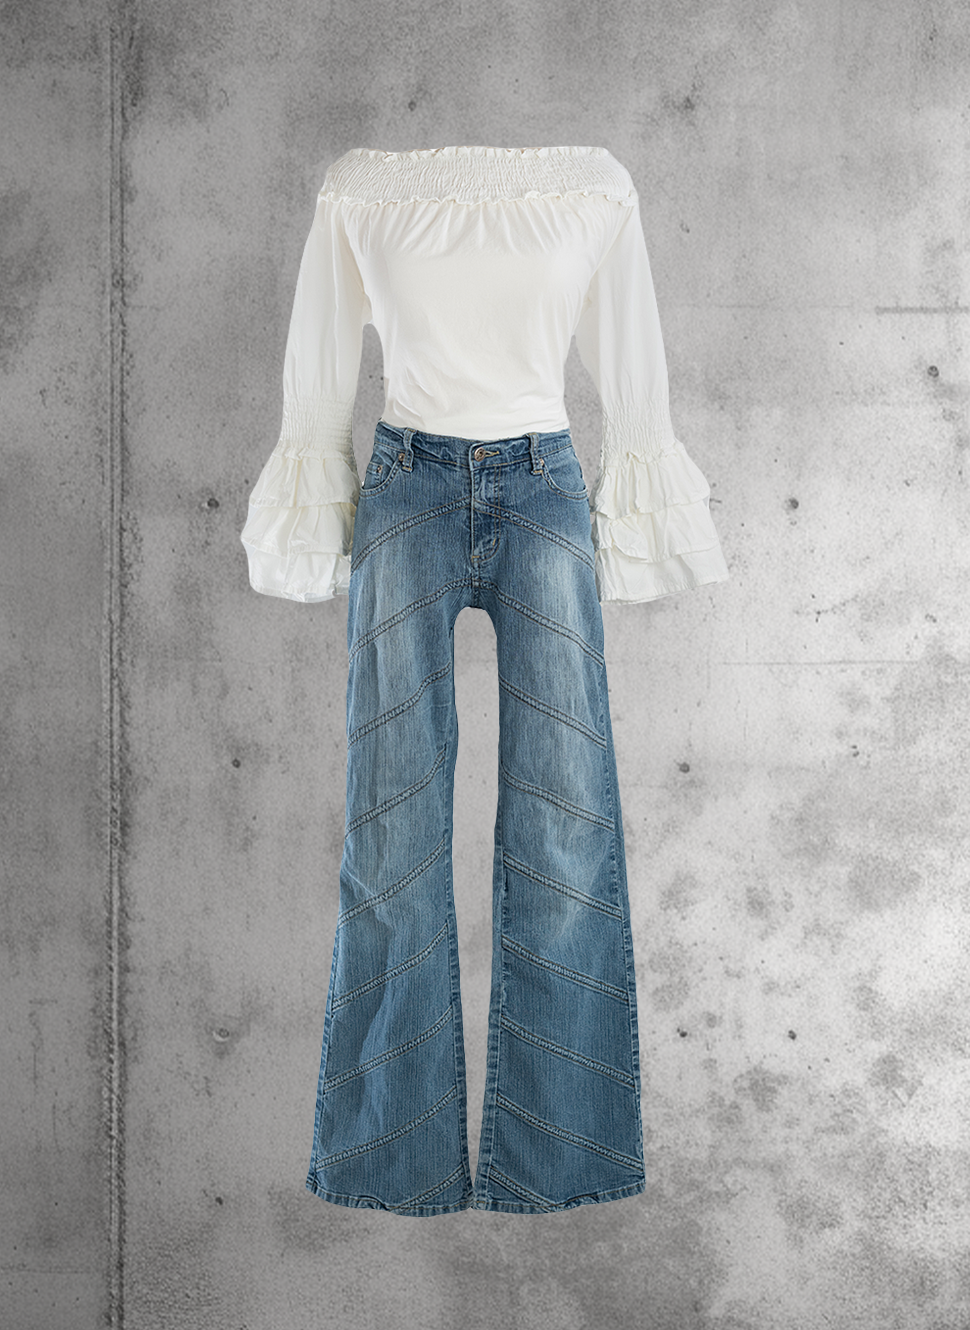 Vintage Candian cowboy blouse and jeans